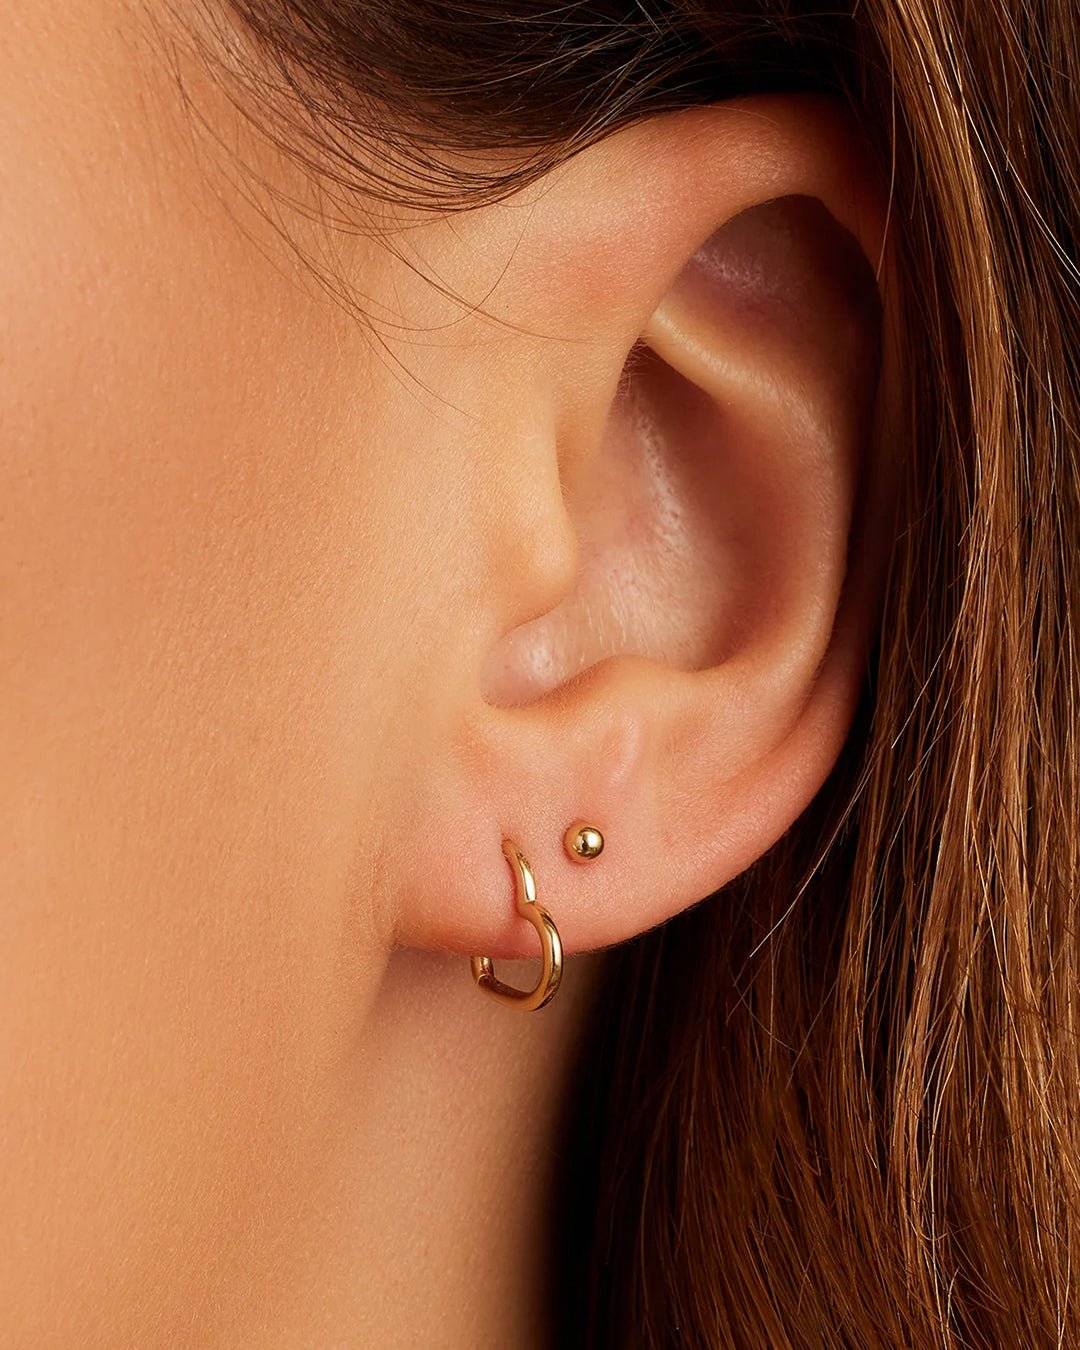 Icing Select Gold Titanium 2MM Ball Flat Back Stud Earrings